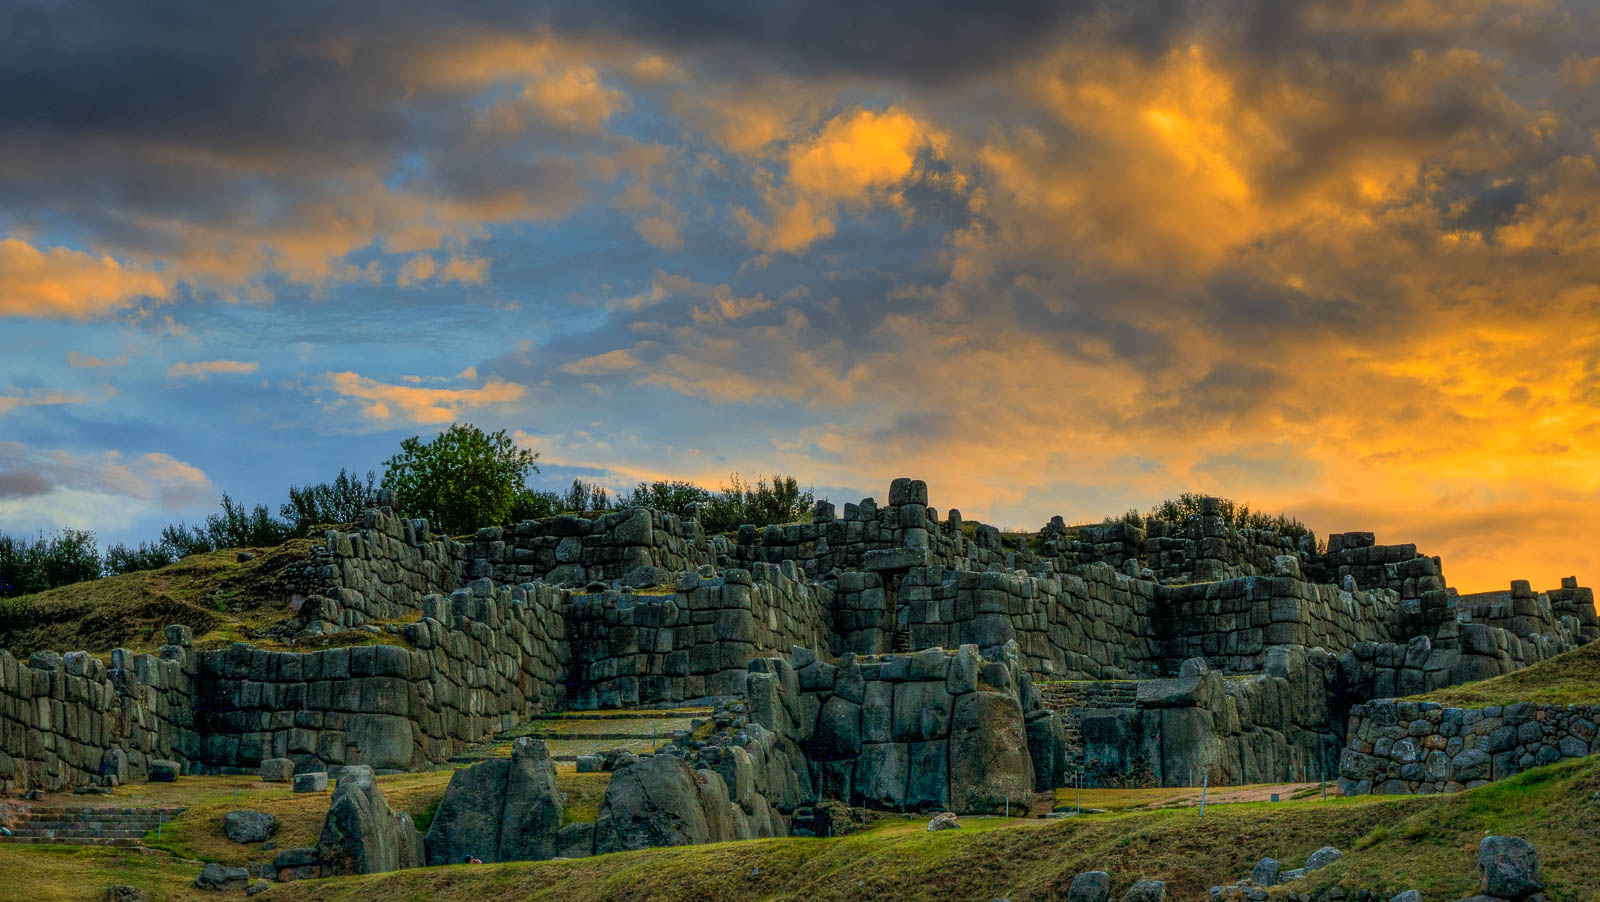 Saksaywaman at sunset - Find Away Photography